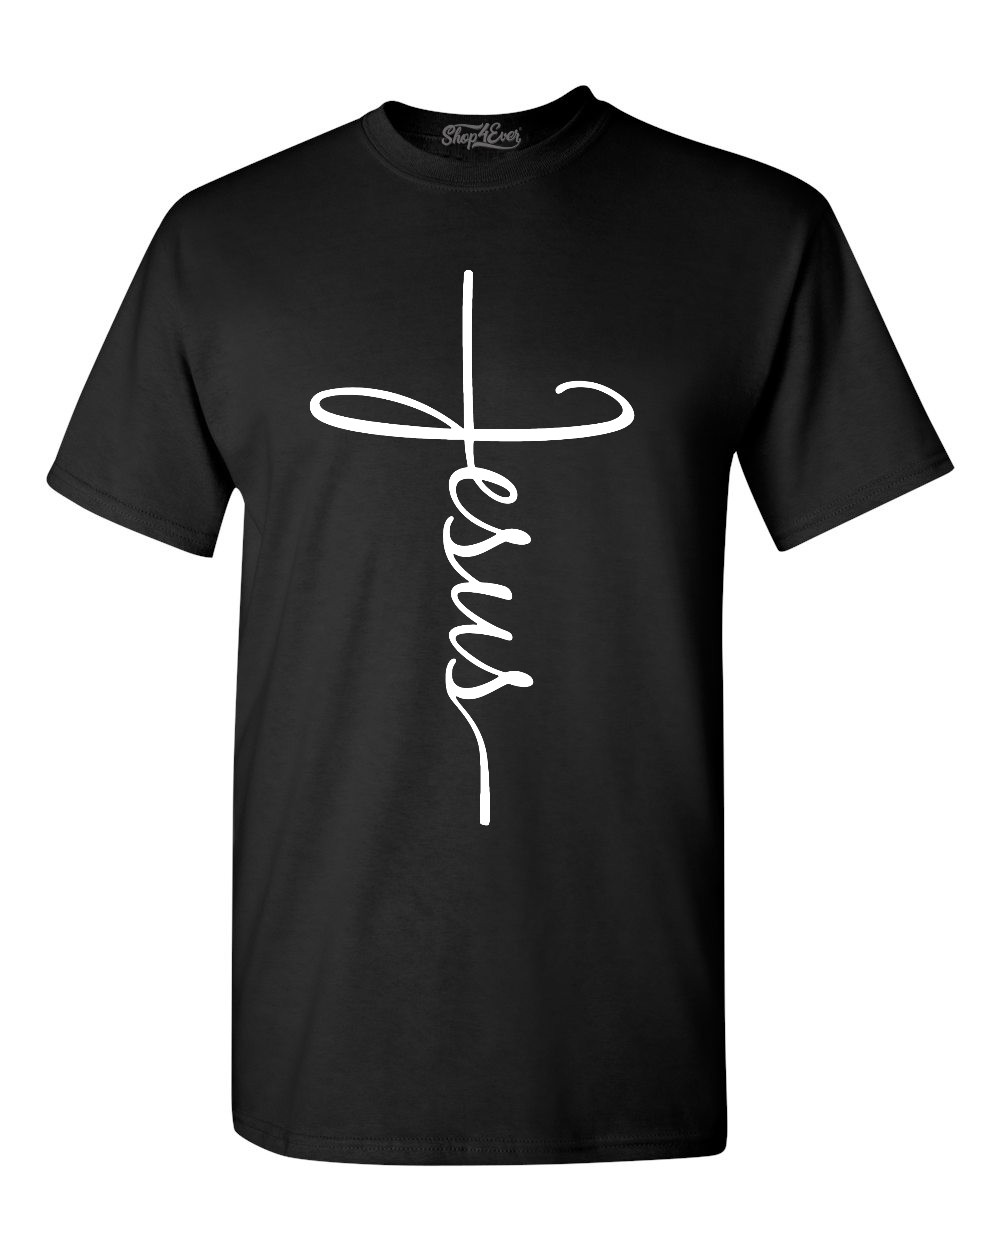 Shop4Ever Men's Jesus Cross Religious Graphic T-shirt Small Black - image 1 of 5